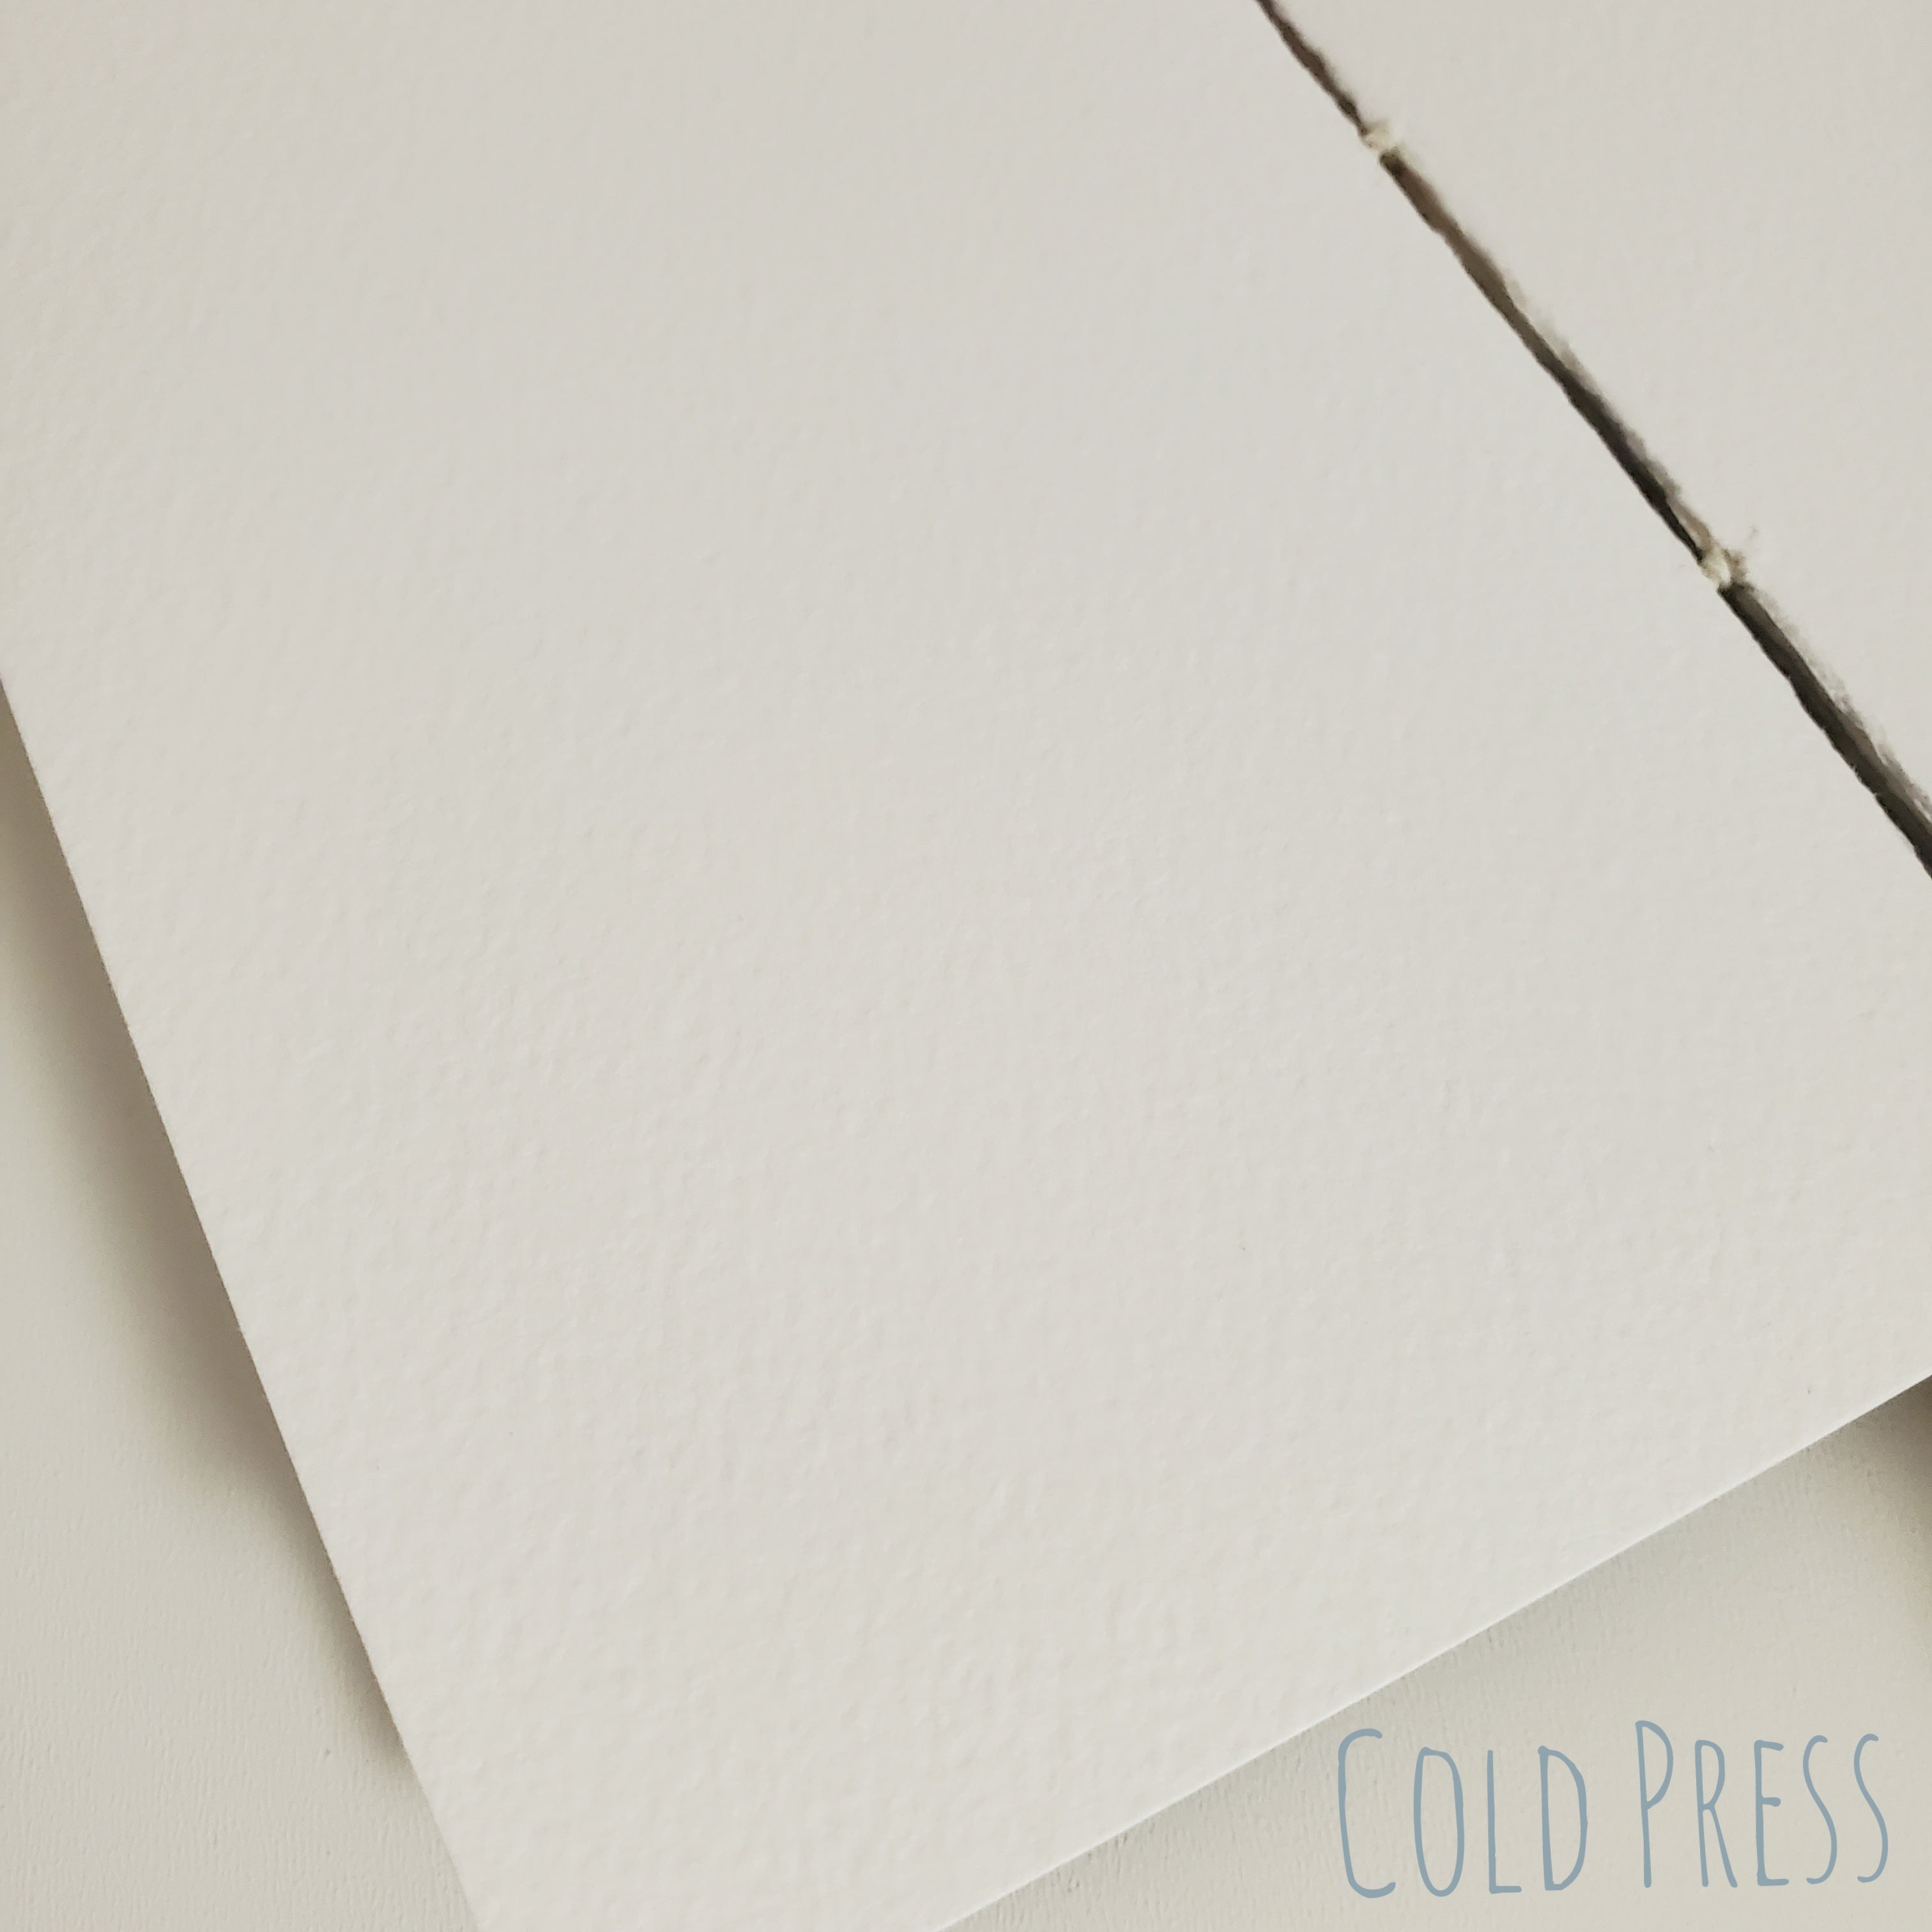 Handmade Mini Watercolor Sketchbook | 100% Cotton Paper | Golden Daisy